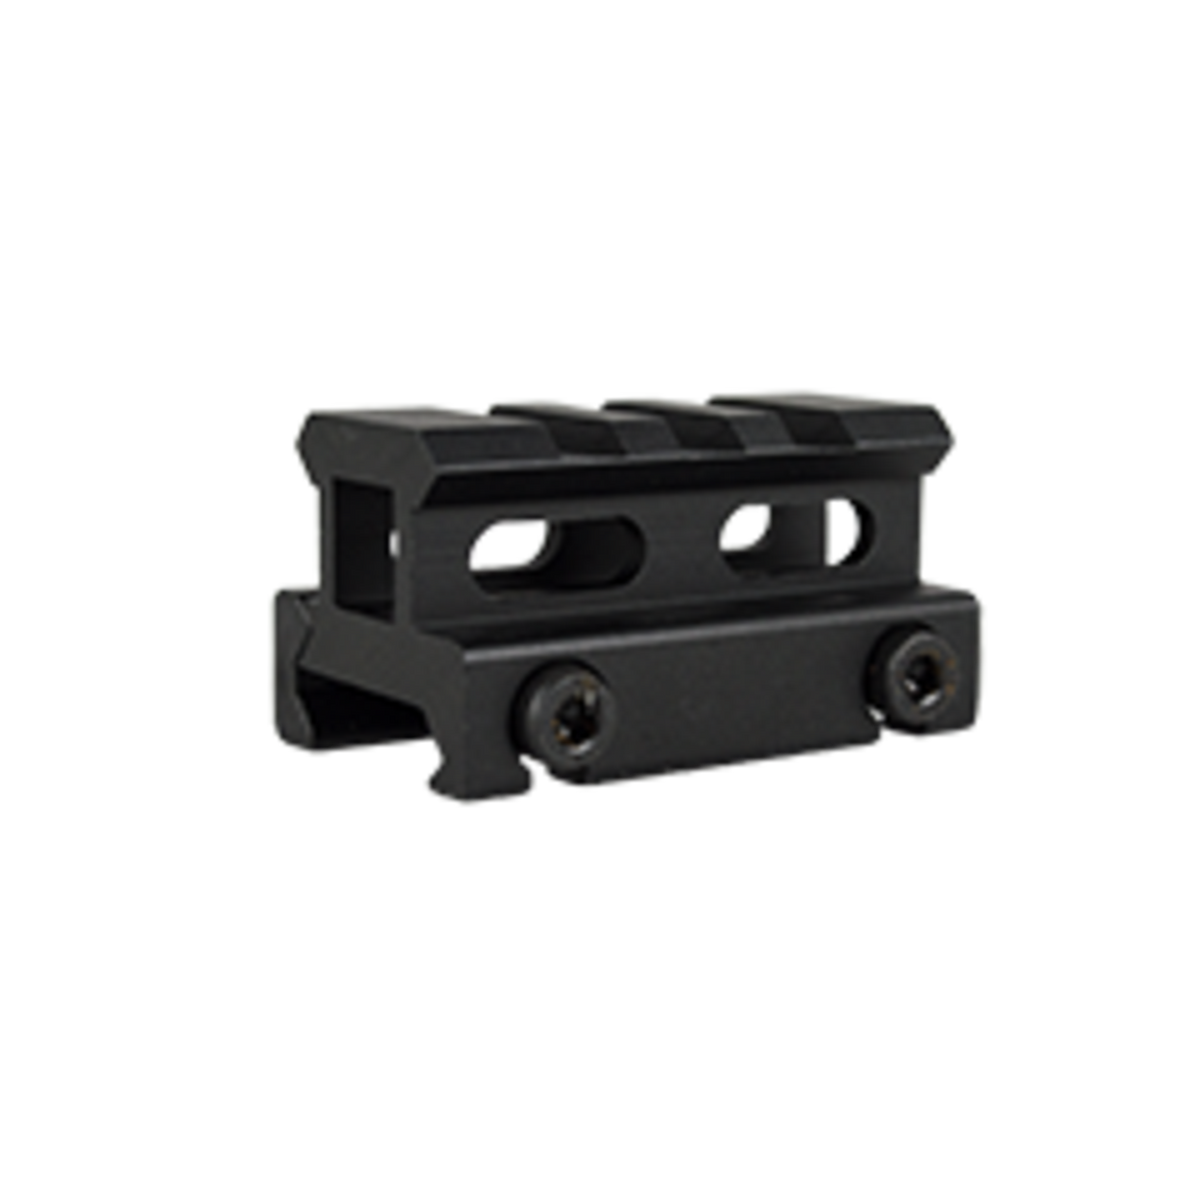 Valken V Tactical Mini Riser 3/4 inch-3 slots